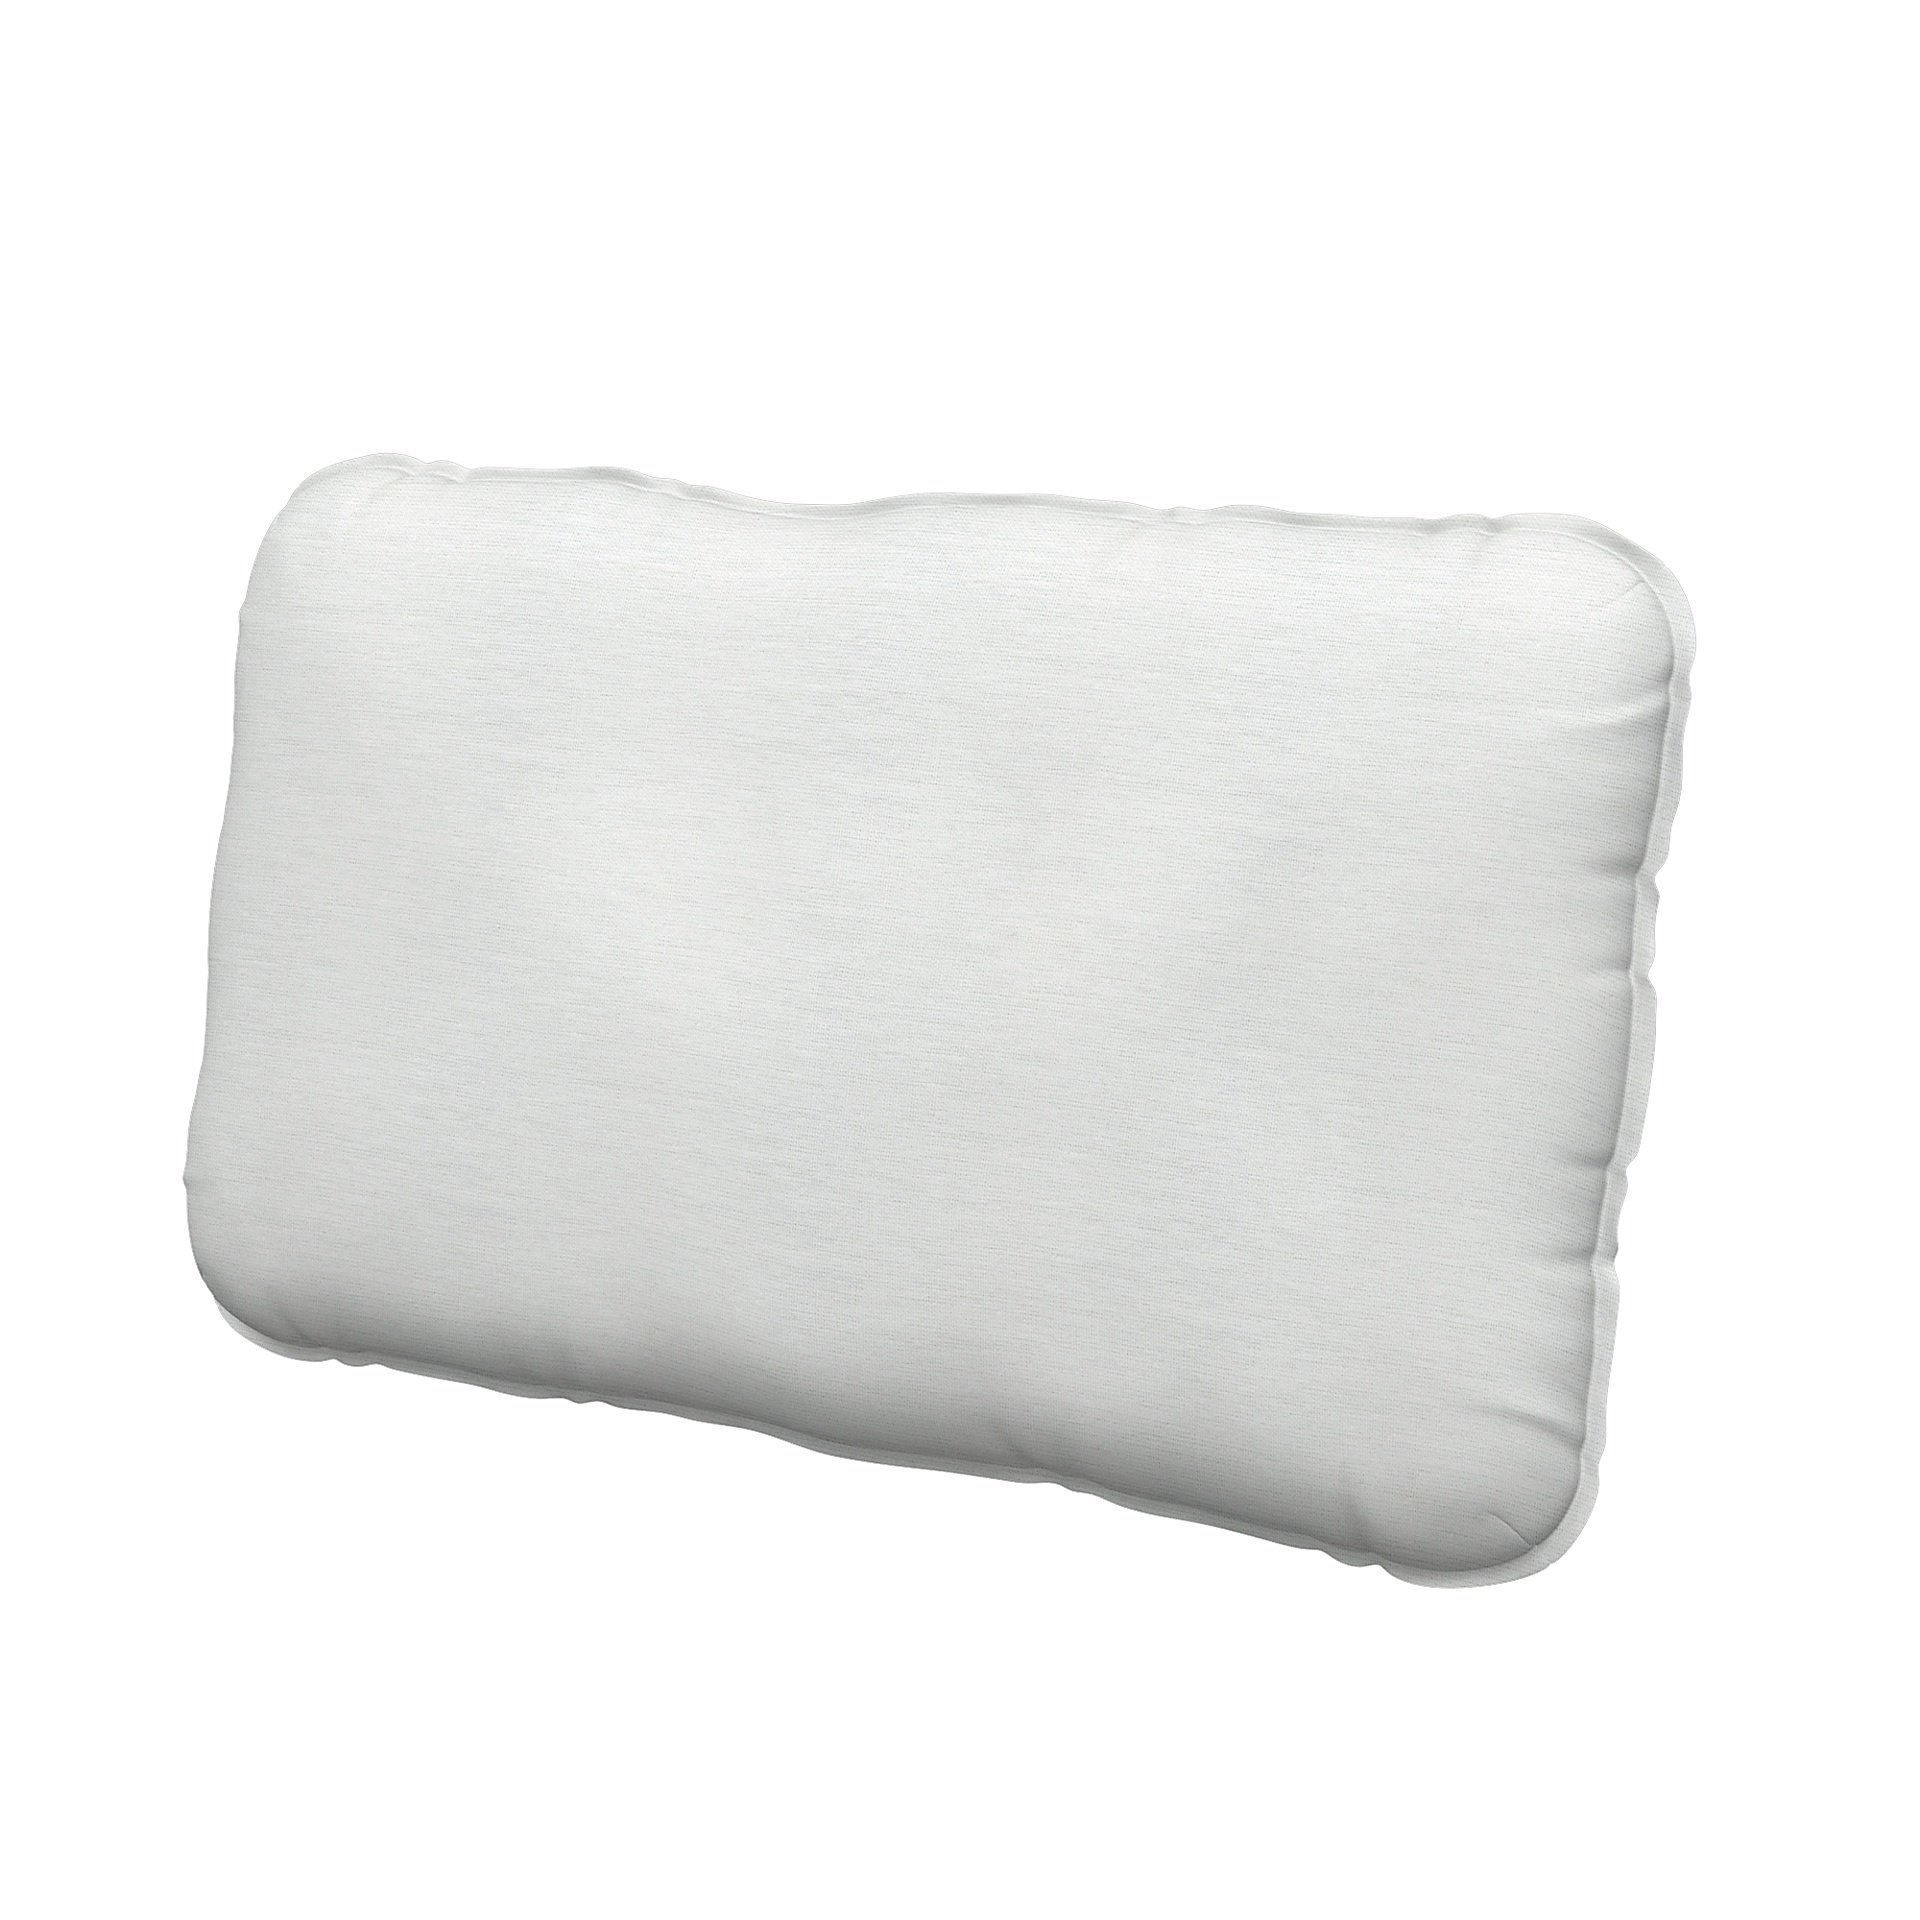 IKEA - Vallentuna back cushion cover 40x75cm, White, Linen - Bemz